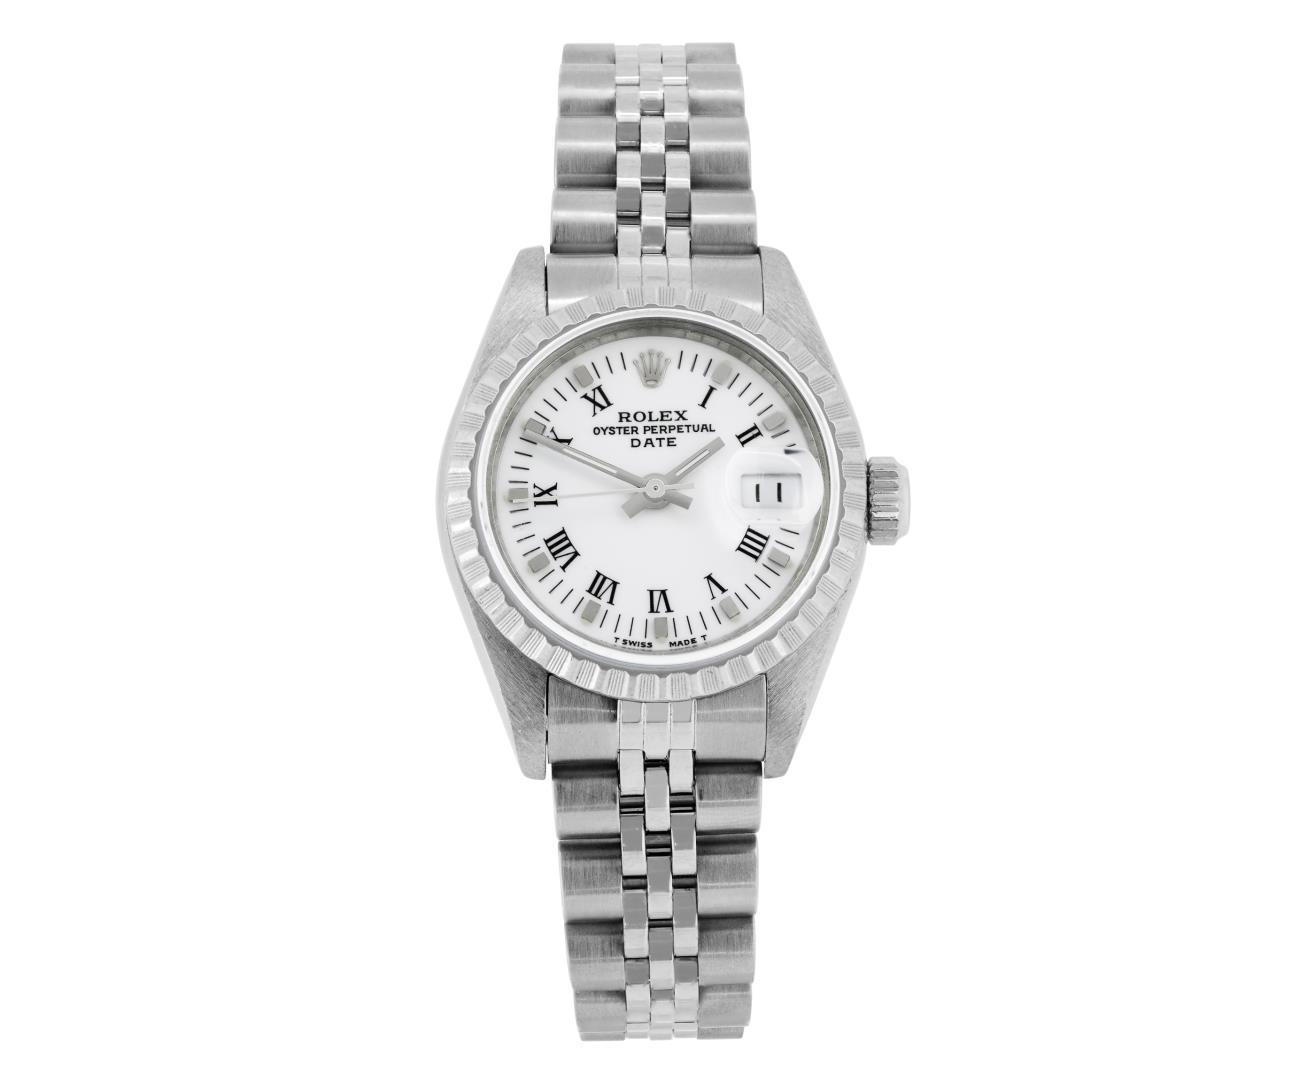 Rolex Ladies Stainless Steel White Roman Date Wristwatch With Rolex Box